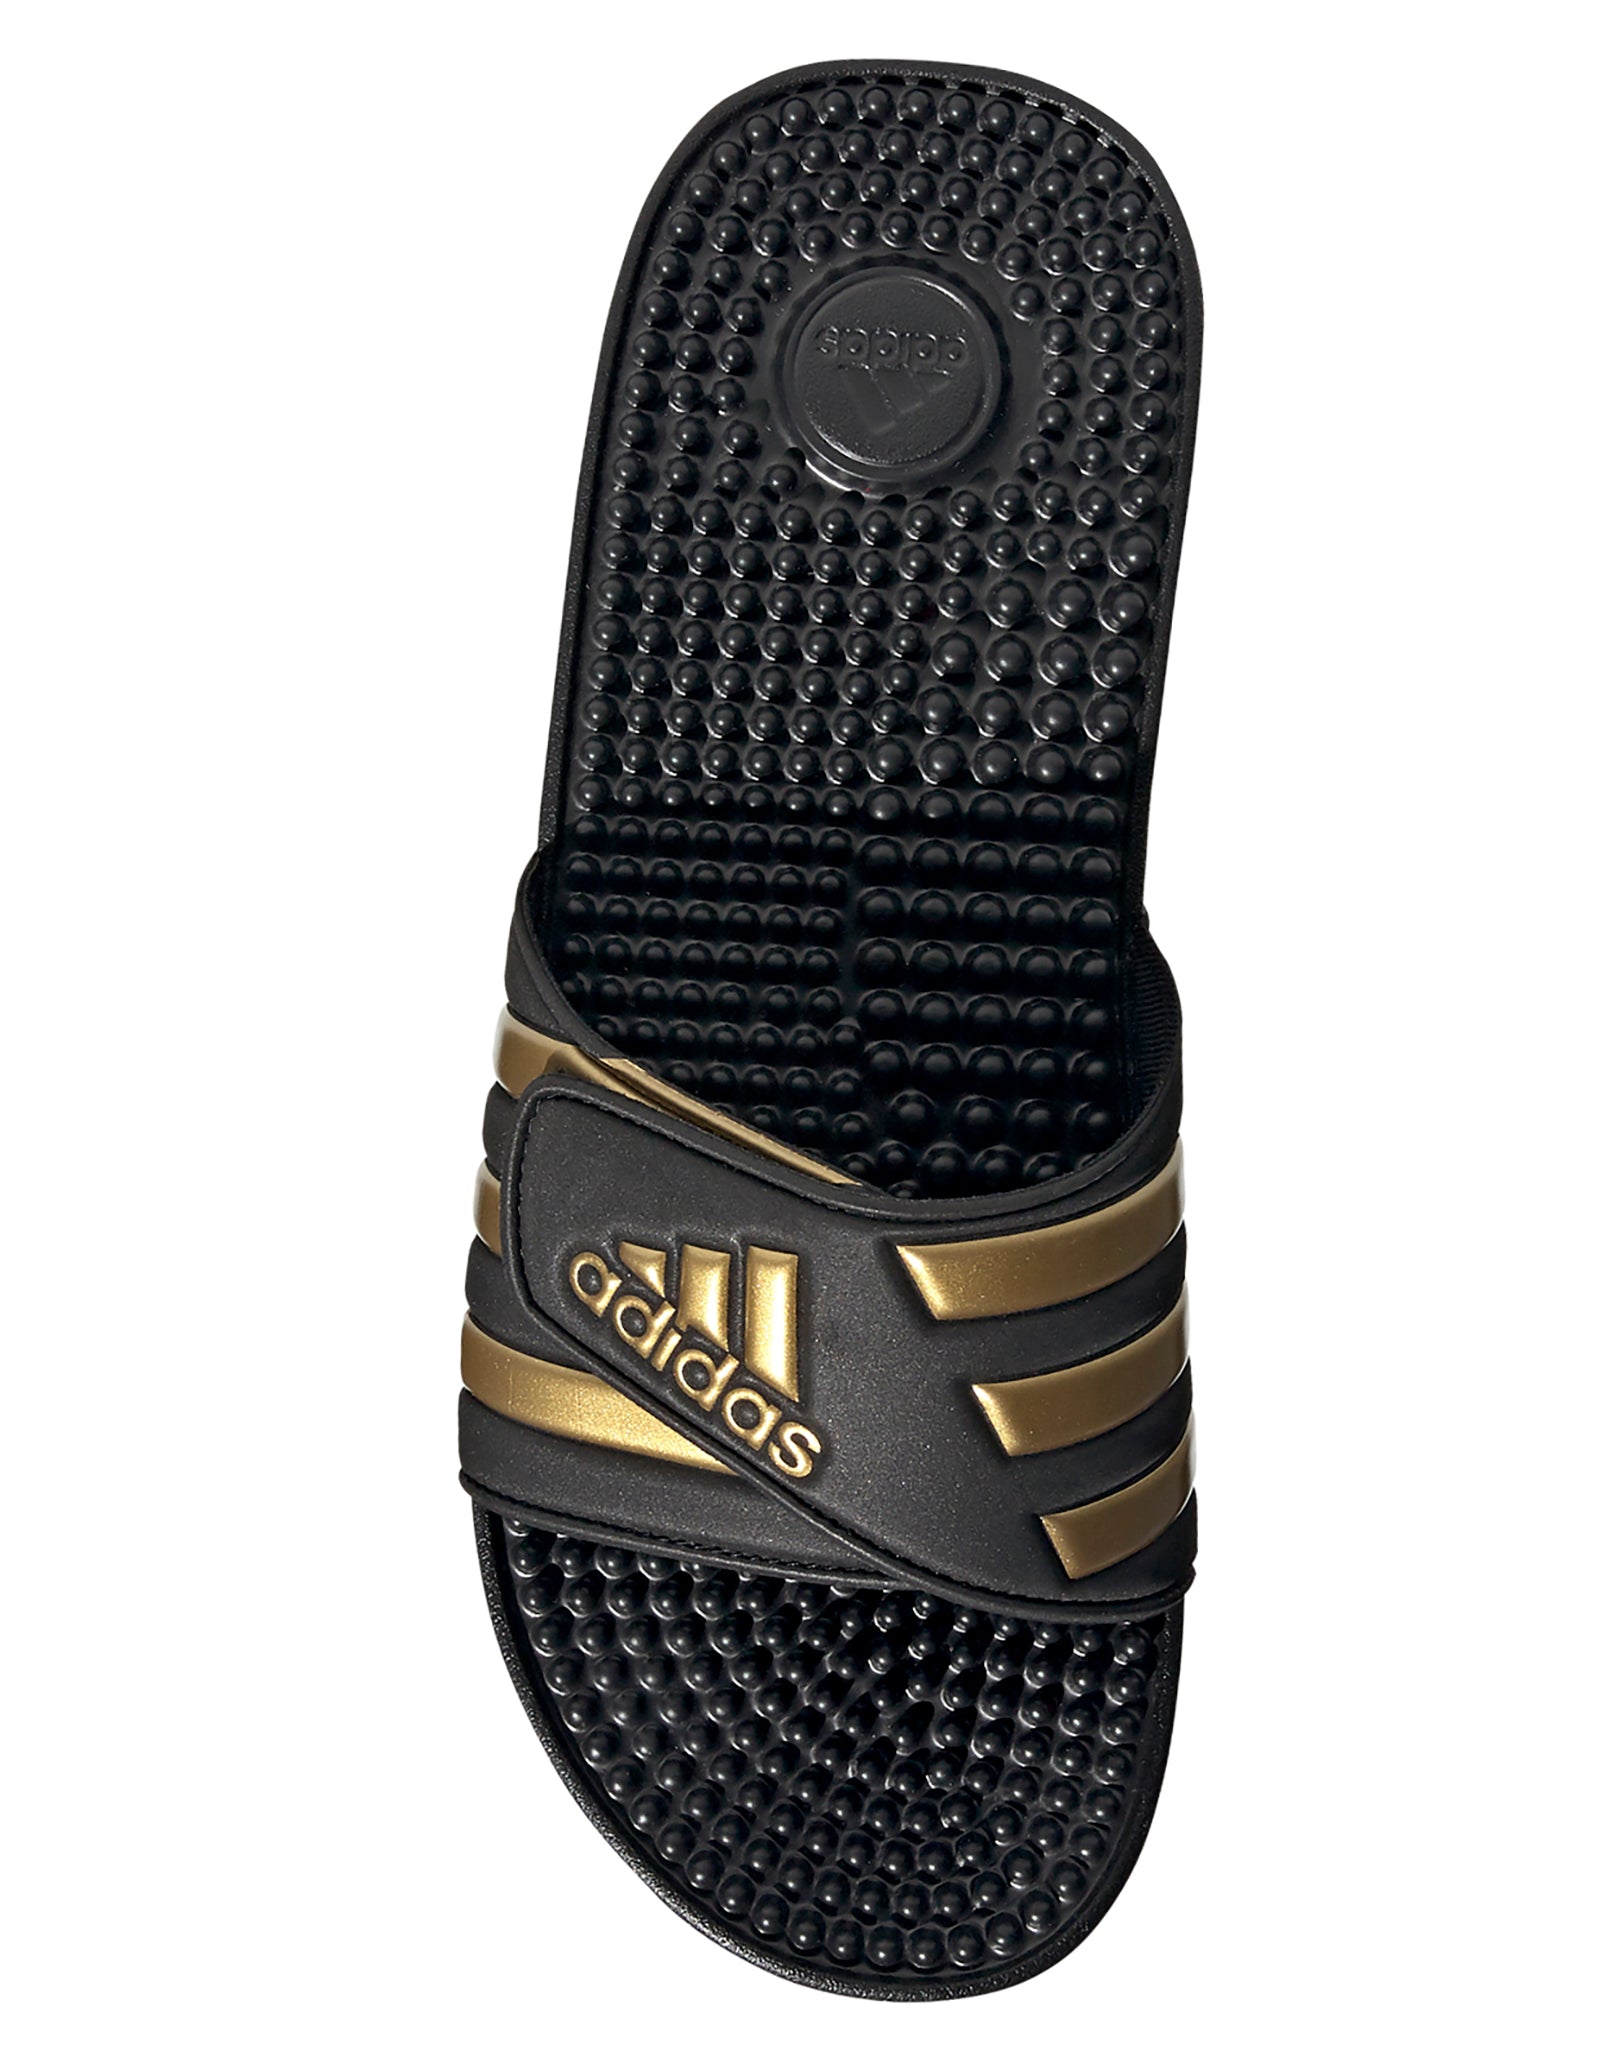 Adidas Adissage Slide - Black/Gold 